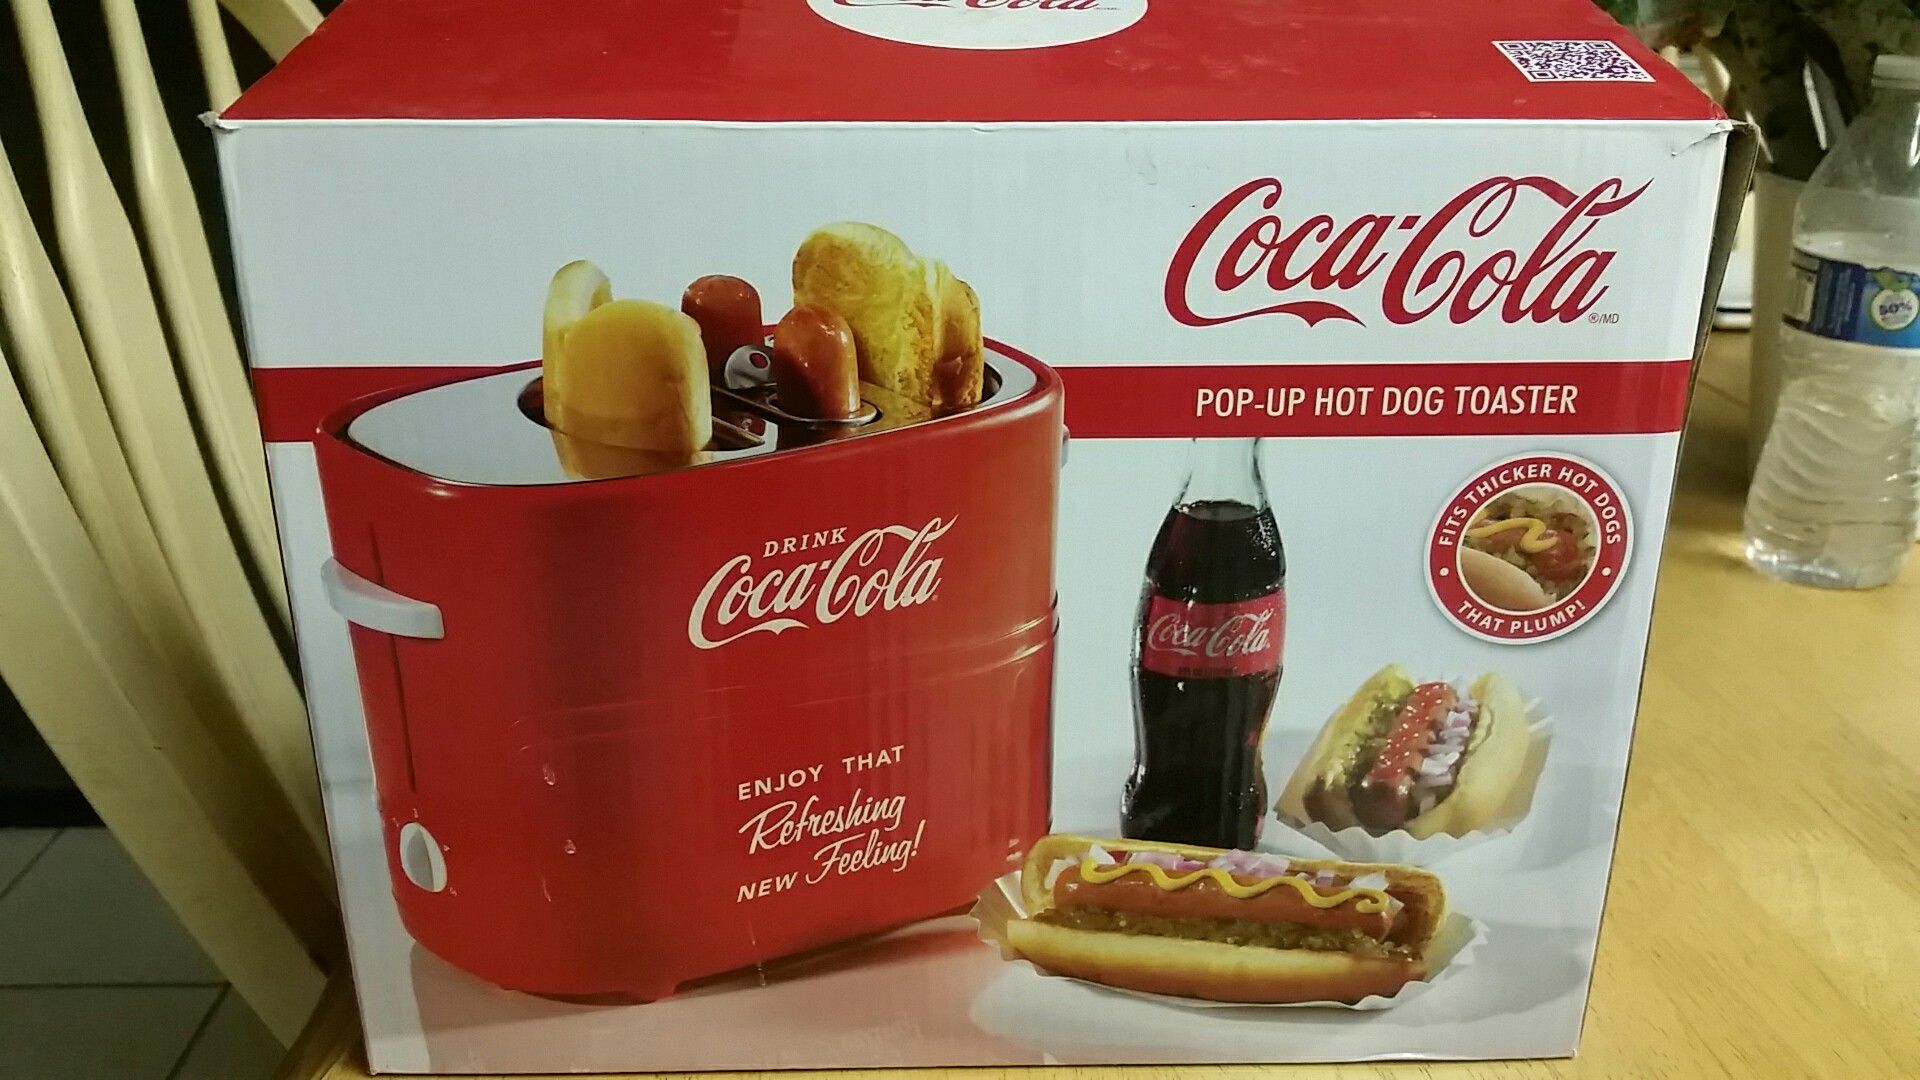 Coca cola hot dog toaster